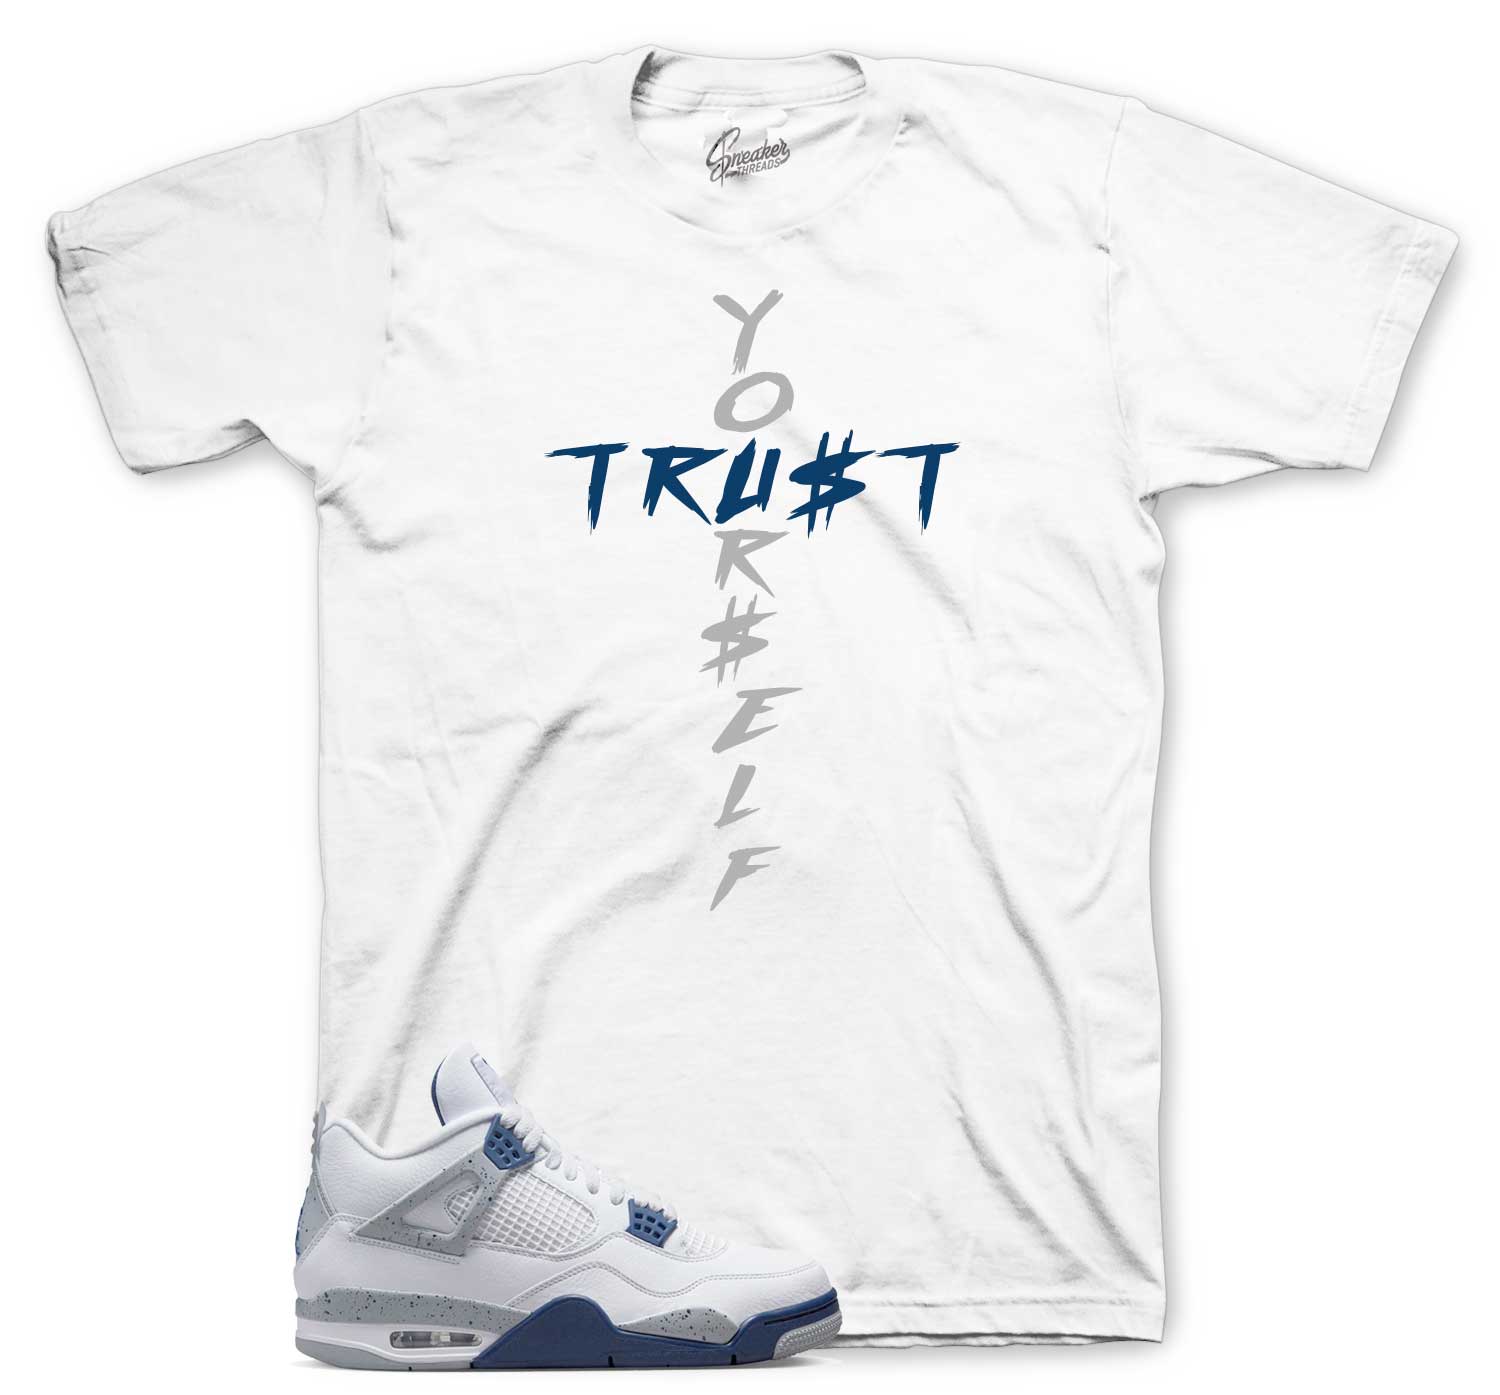 Trust Yourself T-Shirt - Retro 4 Midnight Navy